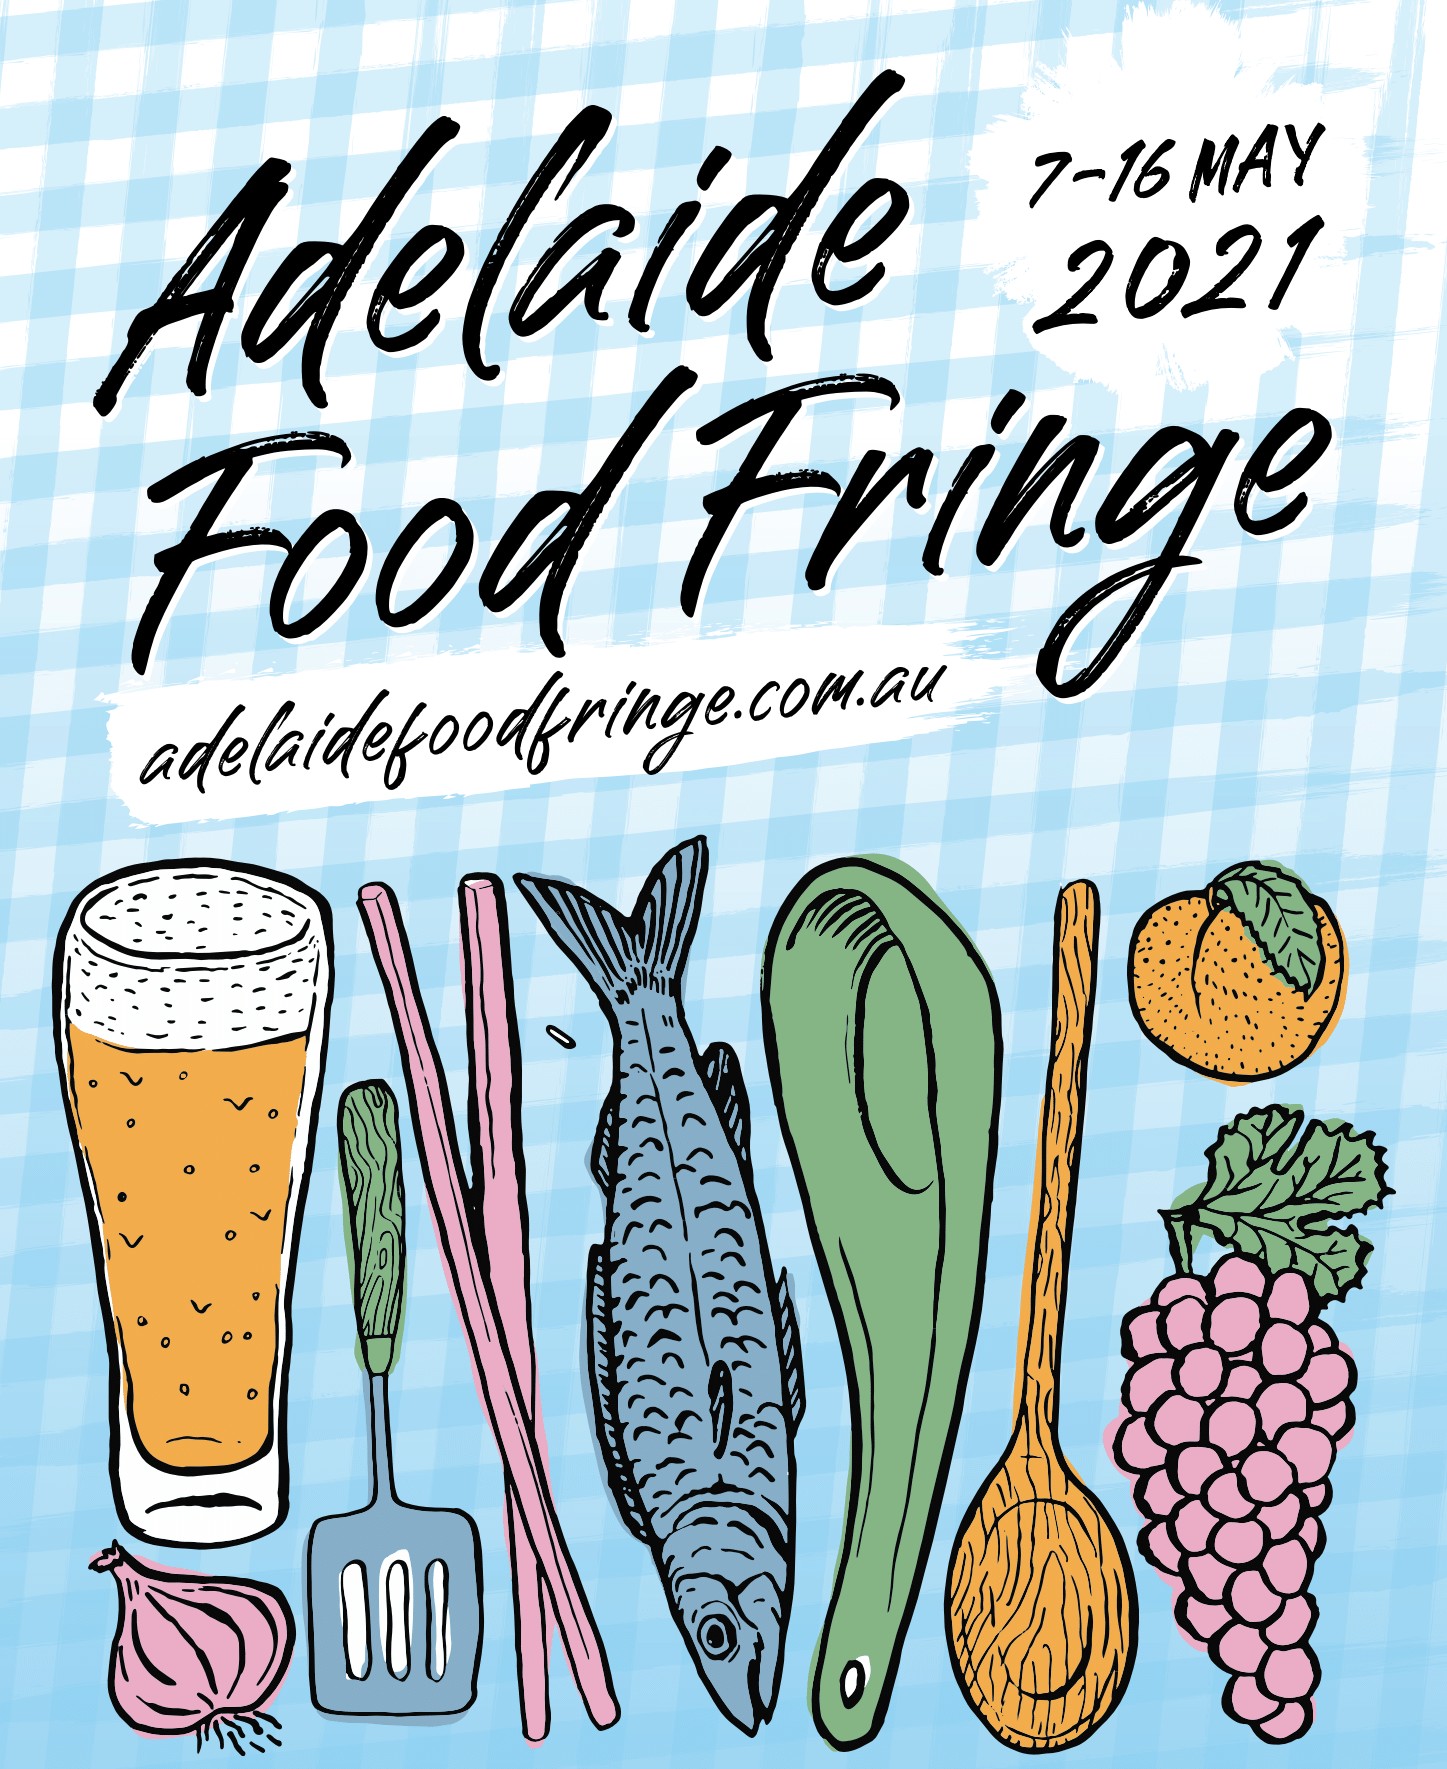 Adelaide Food Fringe